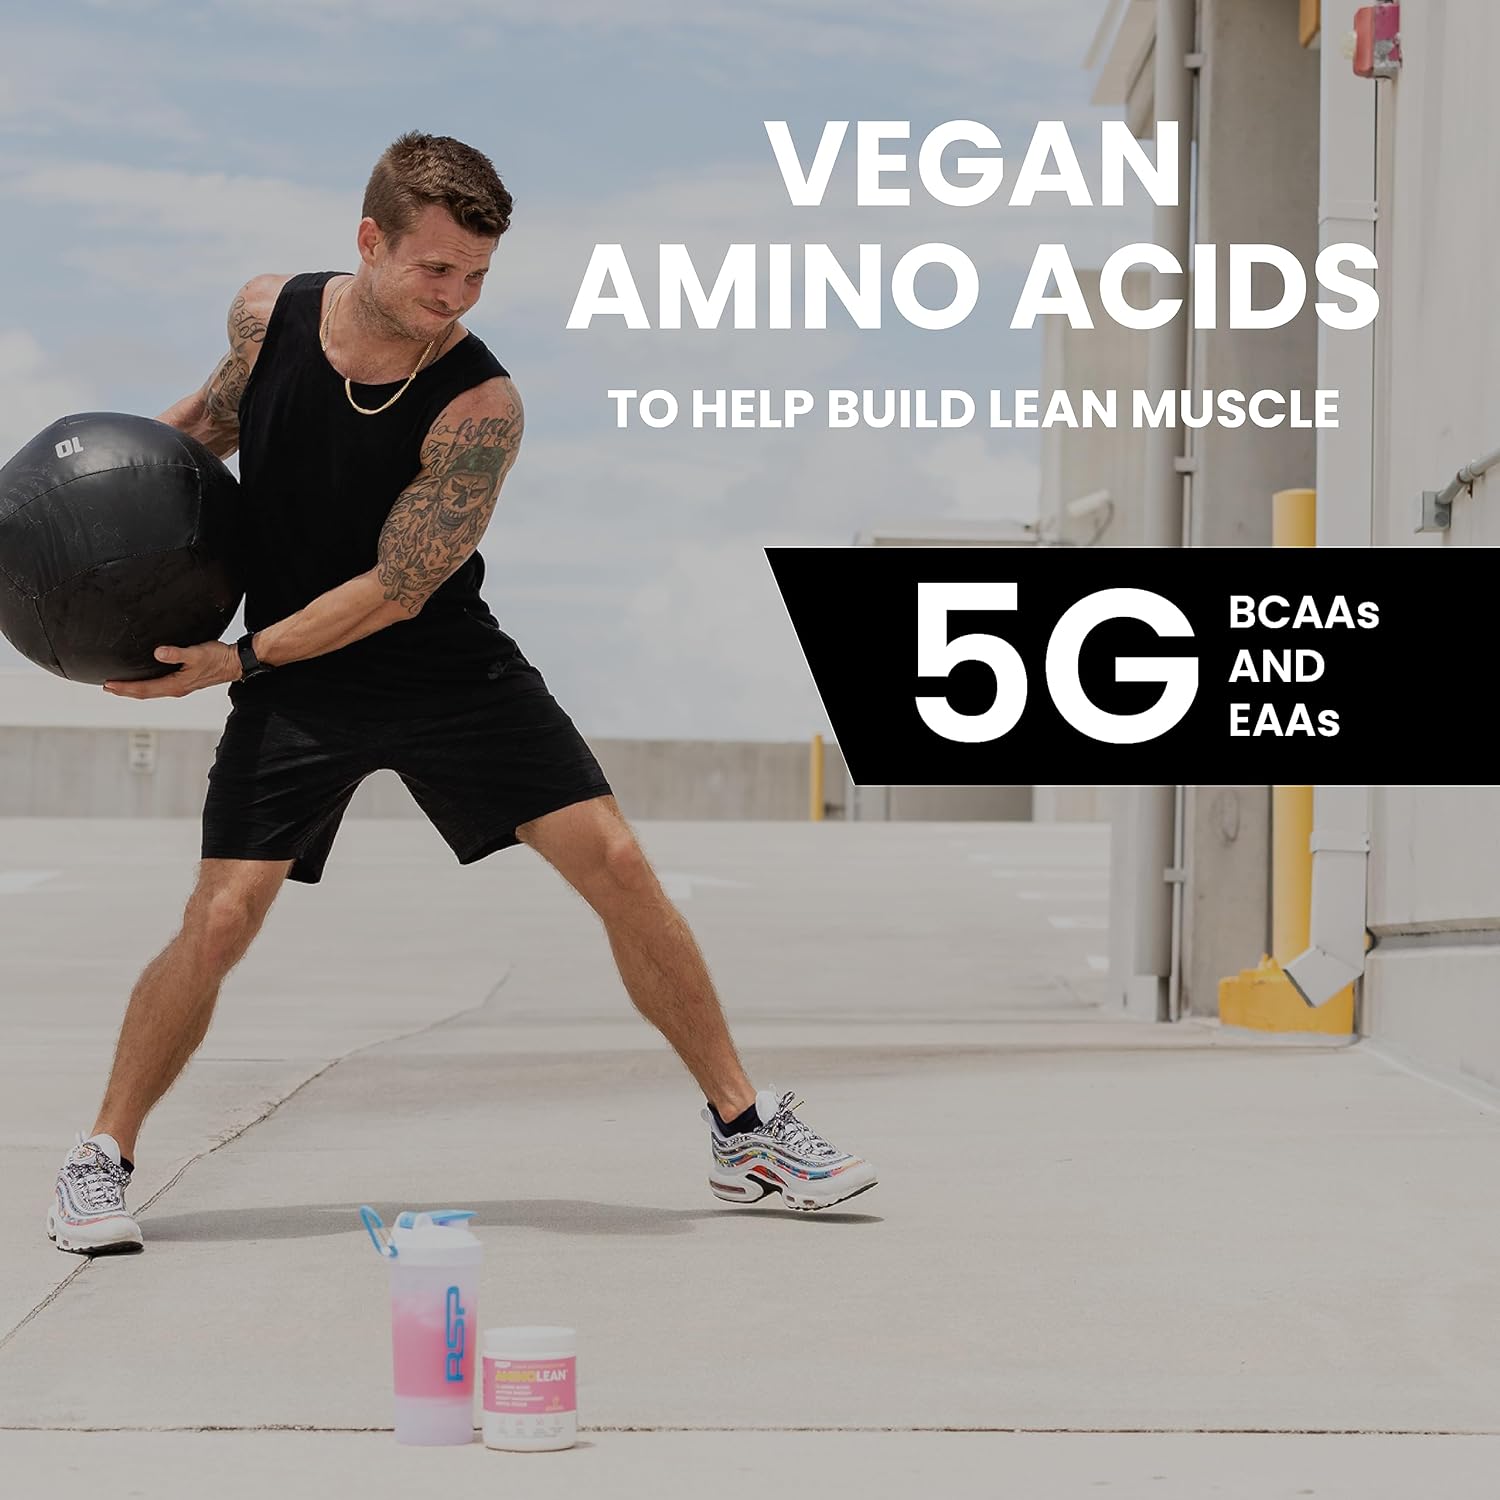 RSP NUTRITION AminoLean Pre Workout Powder, Amino Energy  Weight Management with Vegan BCAA Amino Acids, Natural Caffeine, Preworkout Boost for Men  Women, 30 Serv, Pink Lemonade